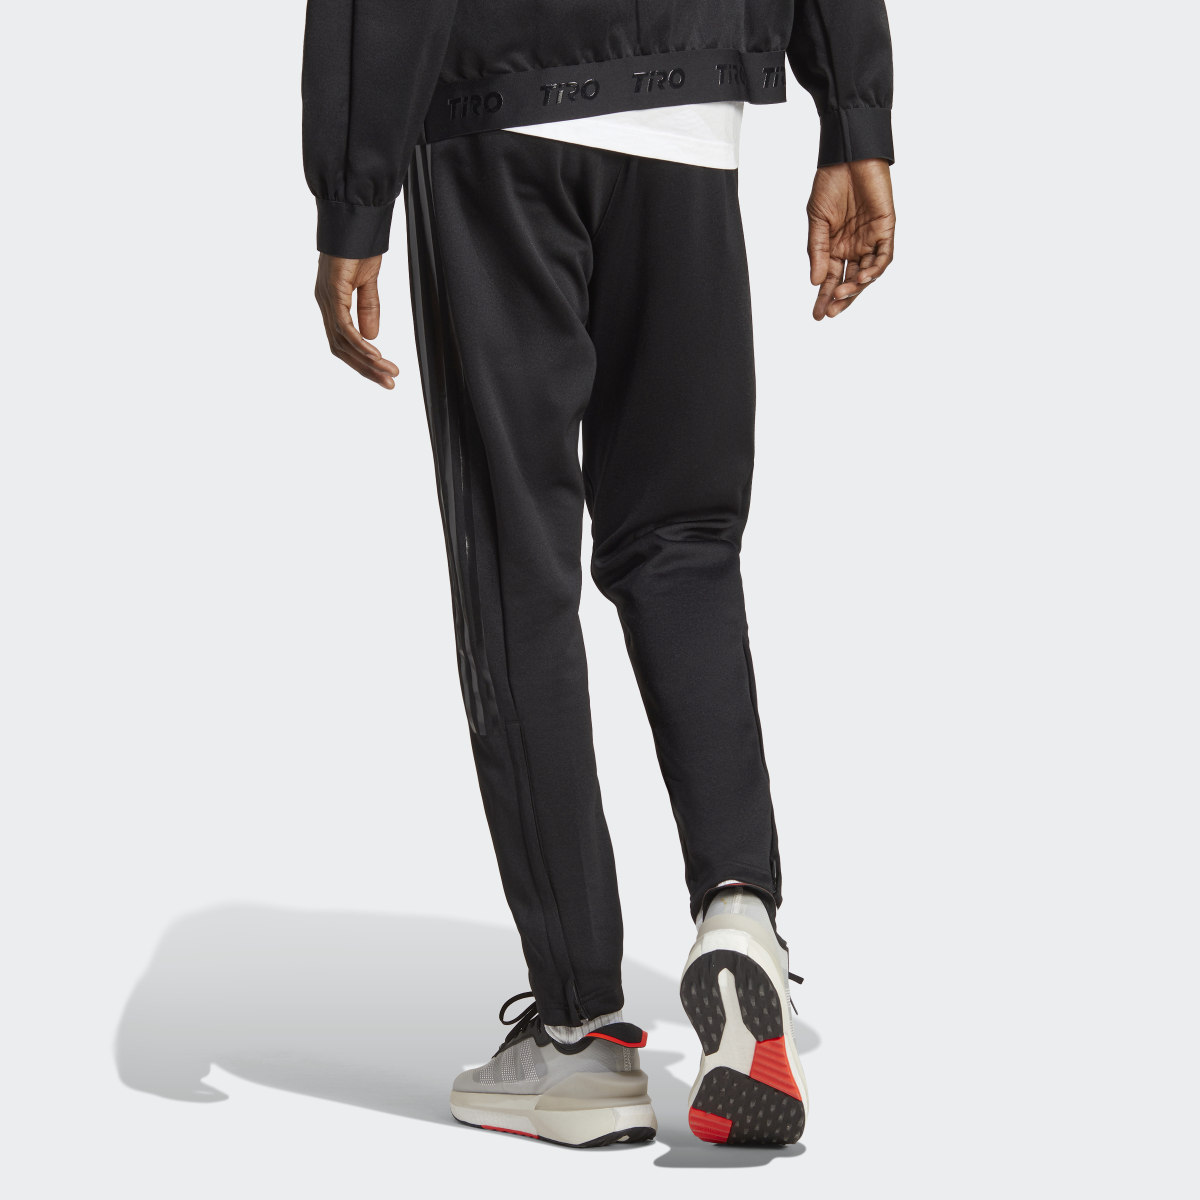 Adidas Tiro Suit-Up Advanced Joggers. 7